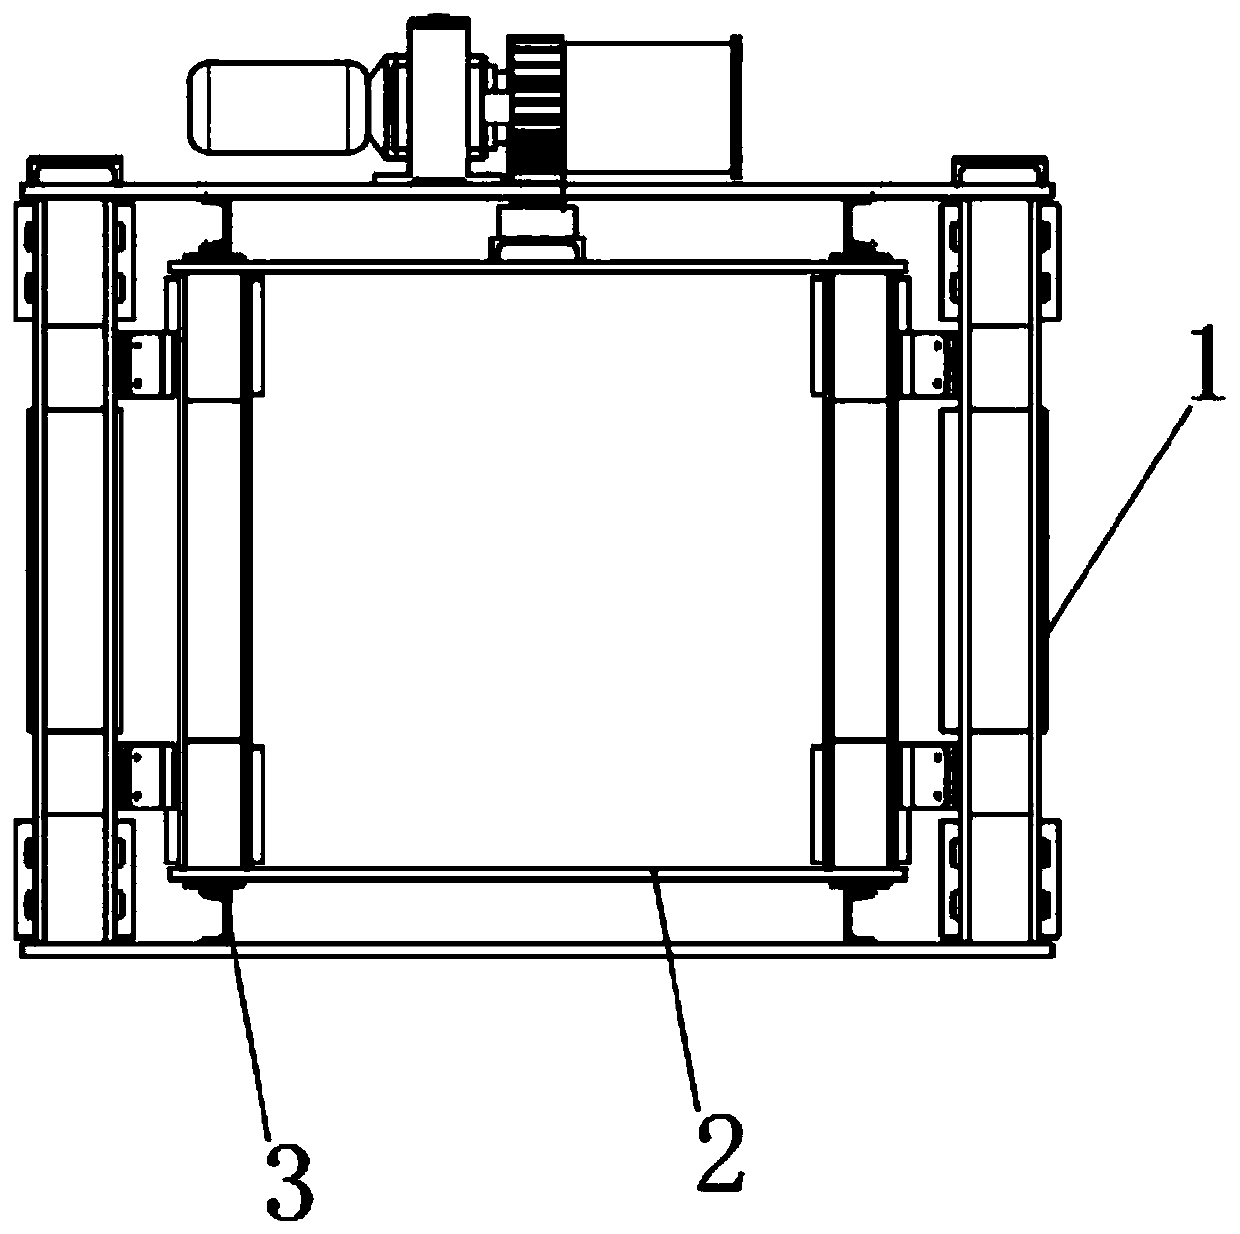 Machine arm structure of bridge erecting machine